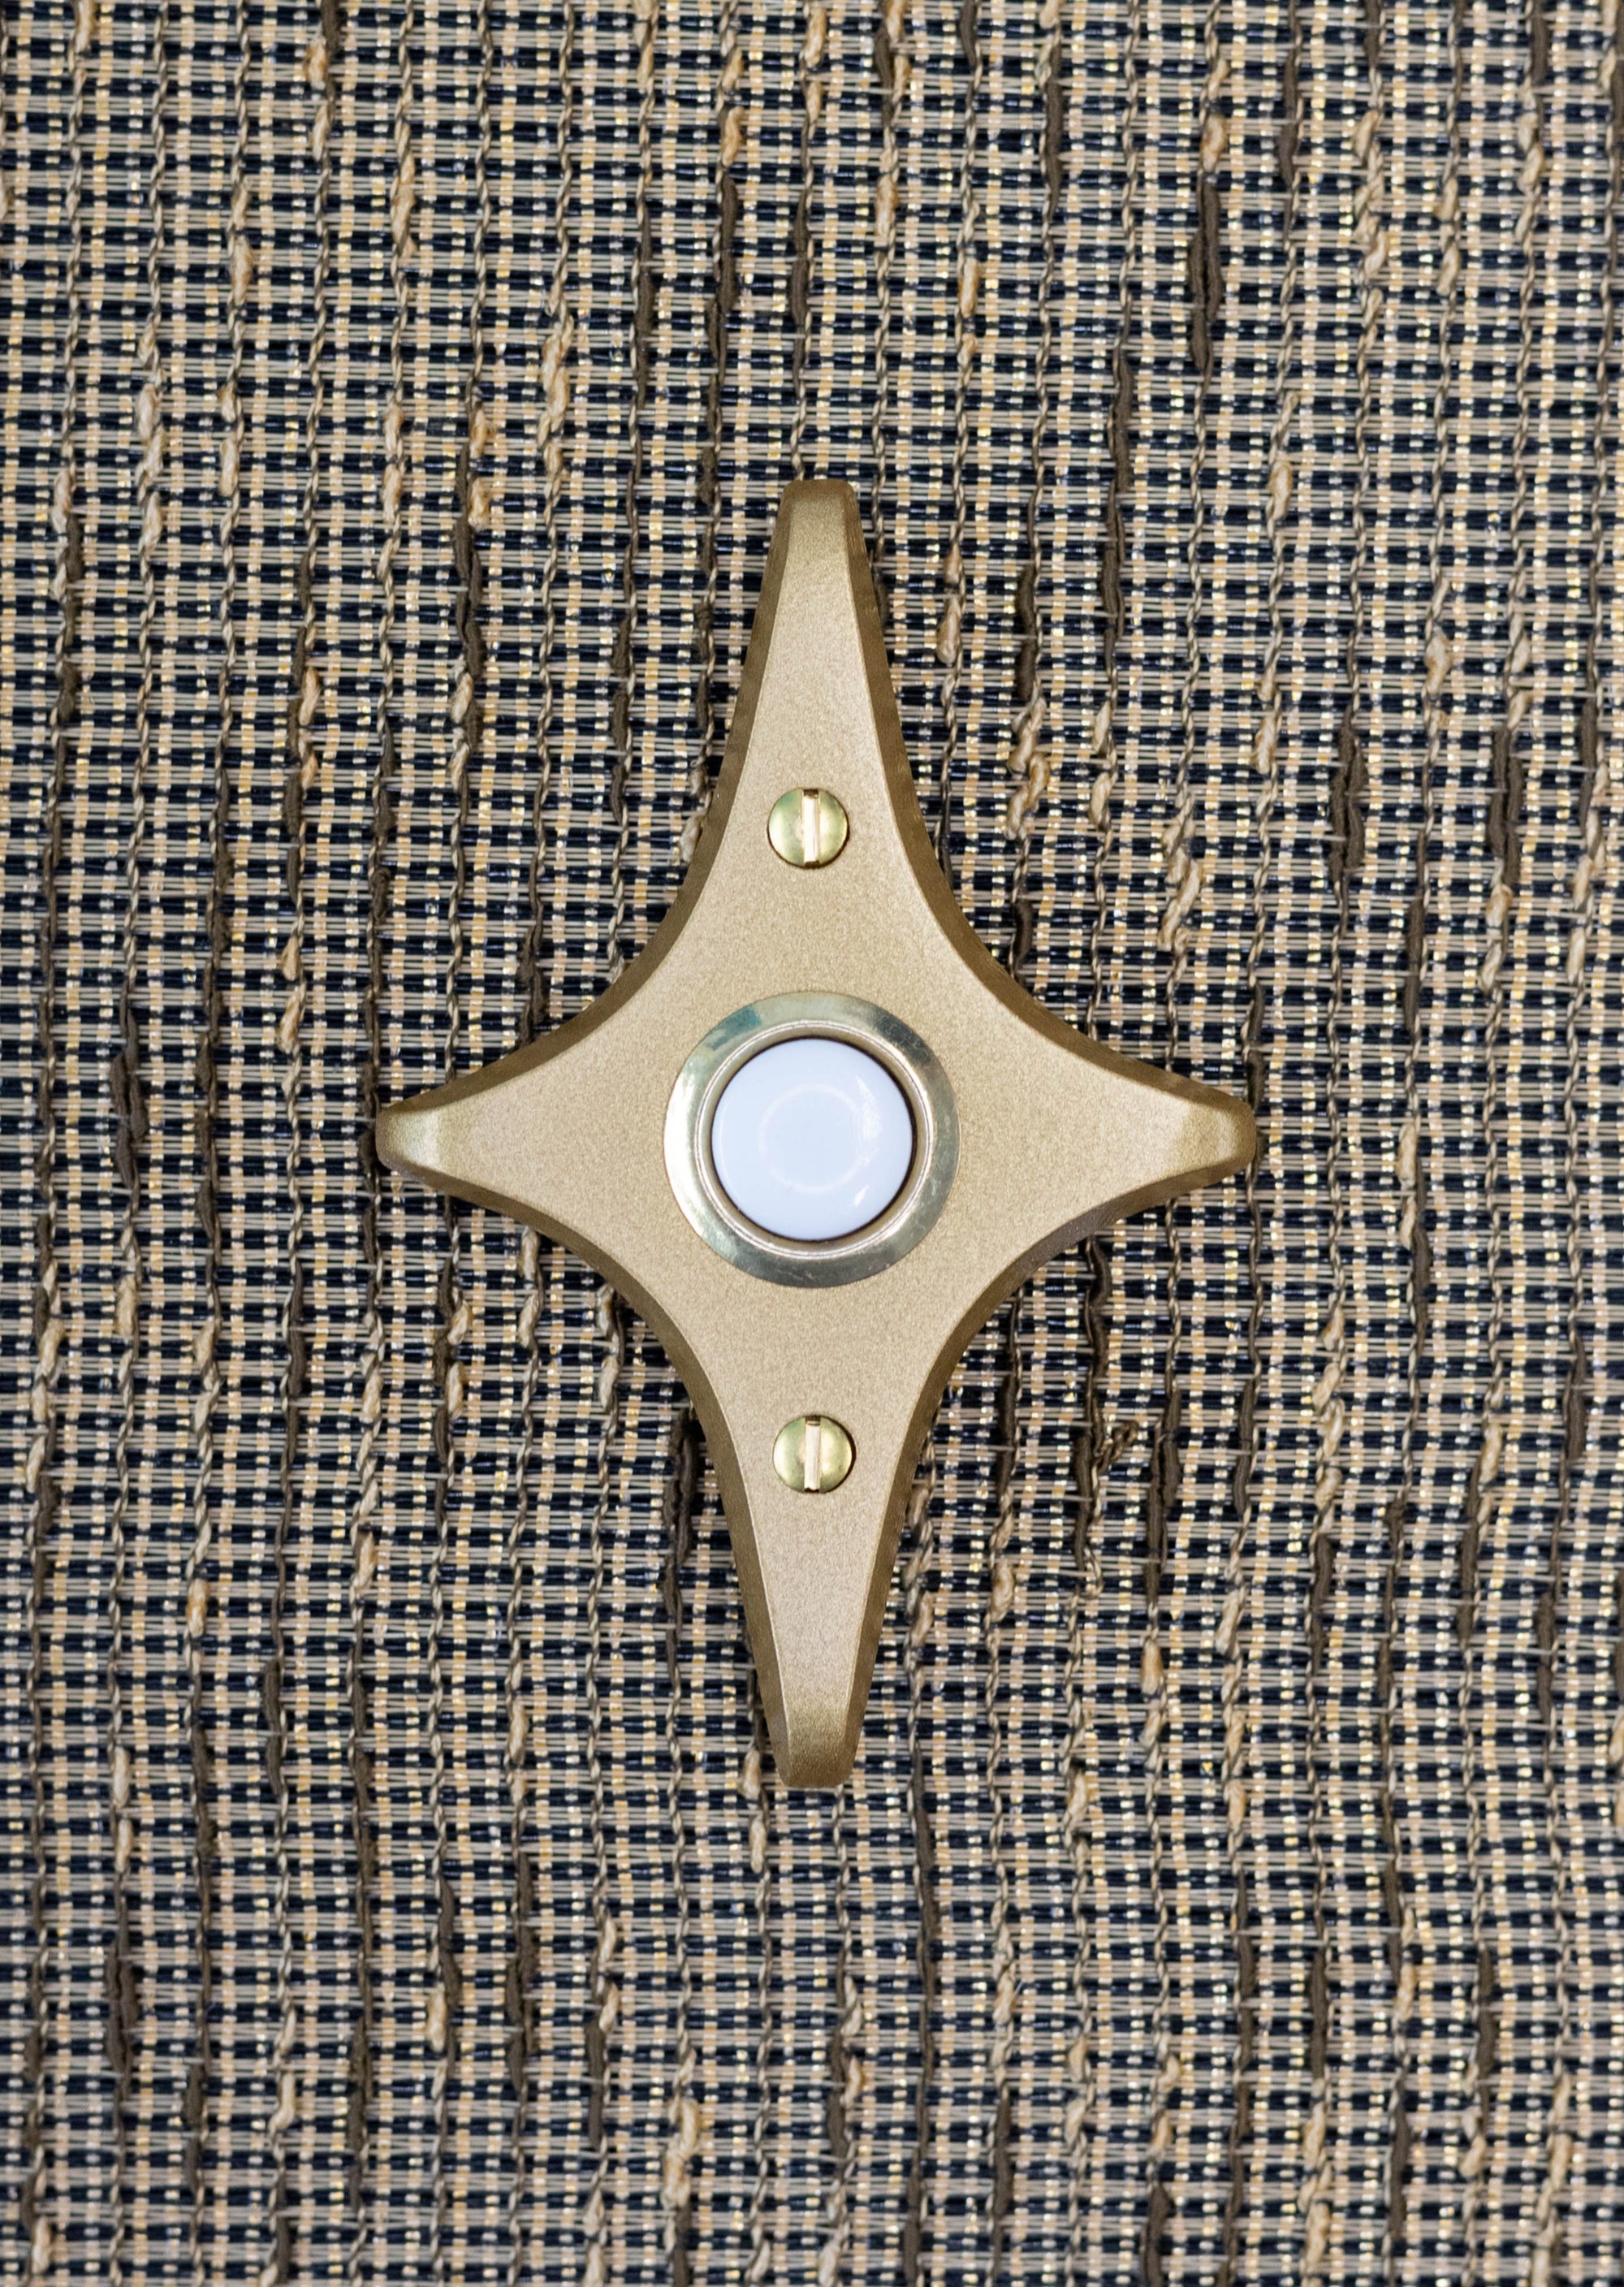 Diamond Star Doorbell Button